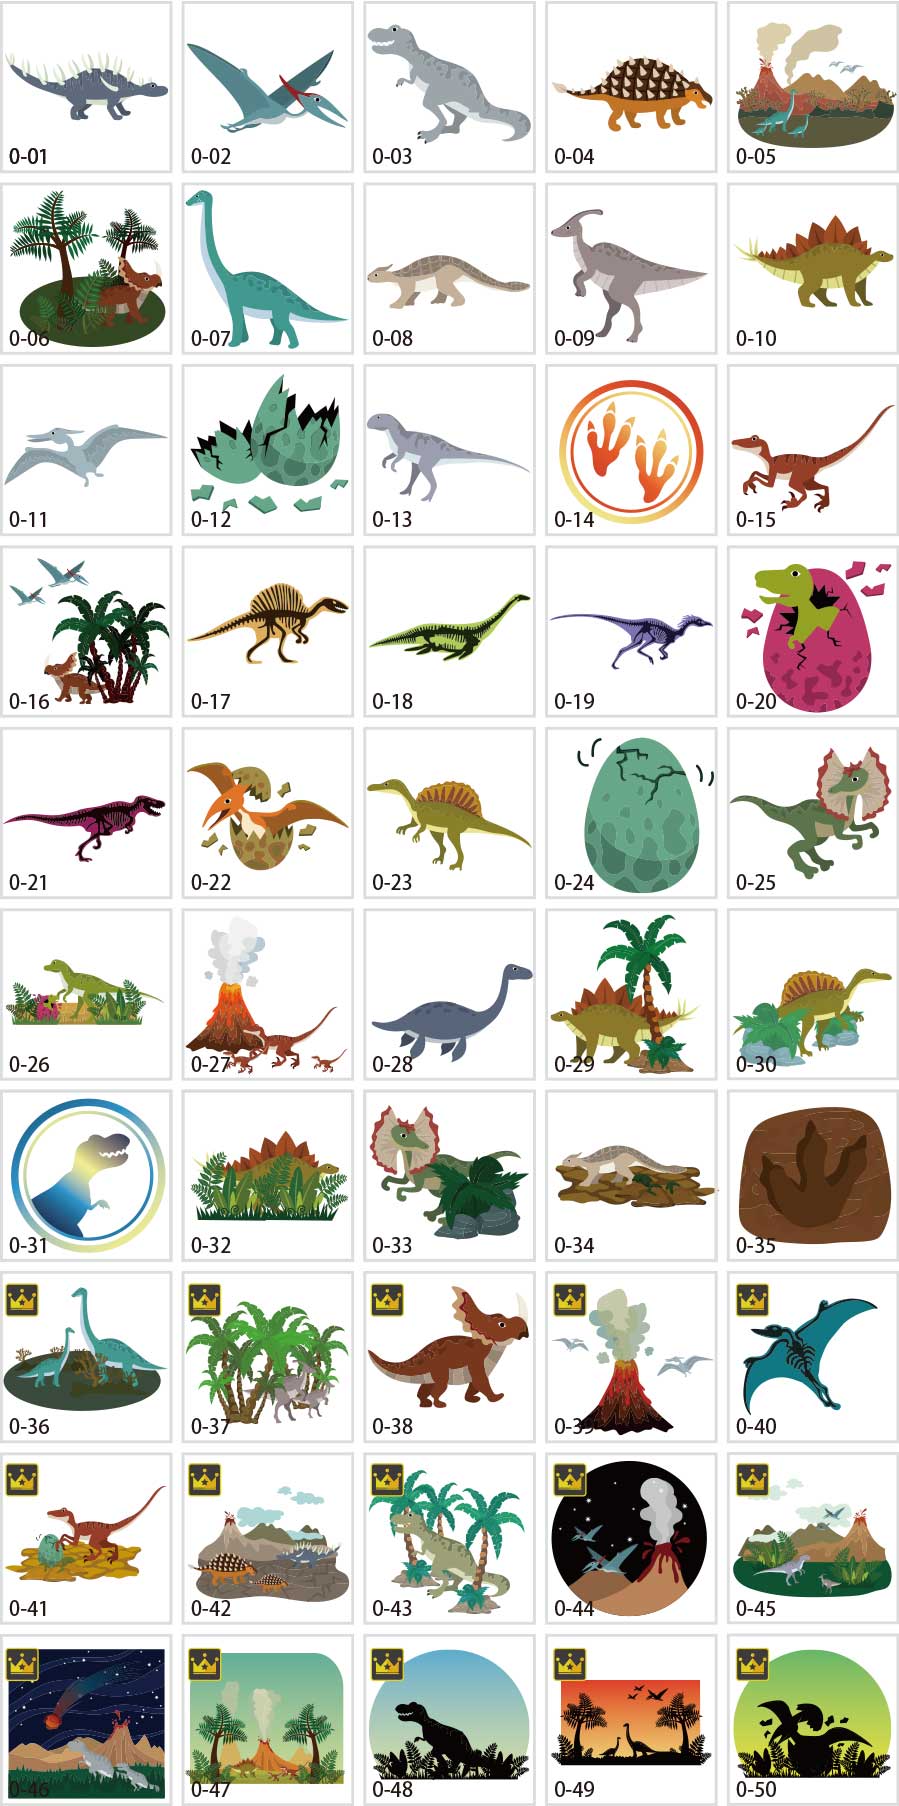 Illustration of the dinosaur era